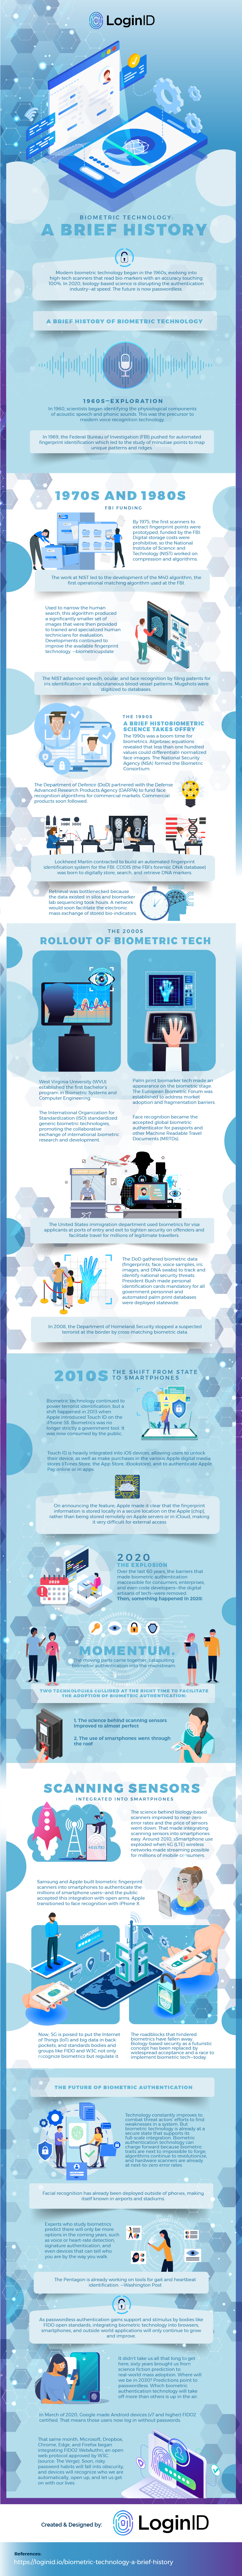 biometric technology -infographic imageIJAIQJ15